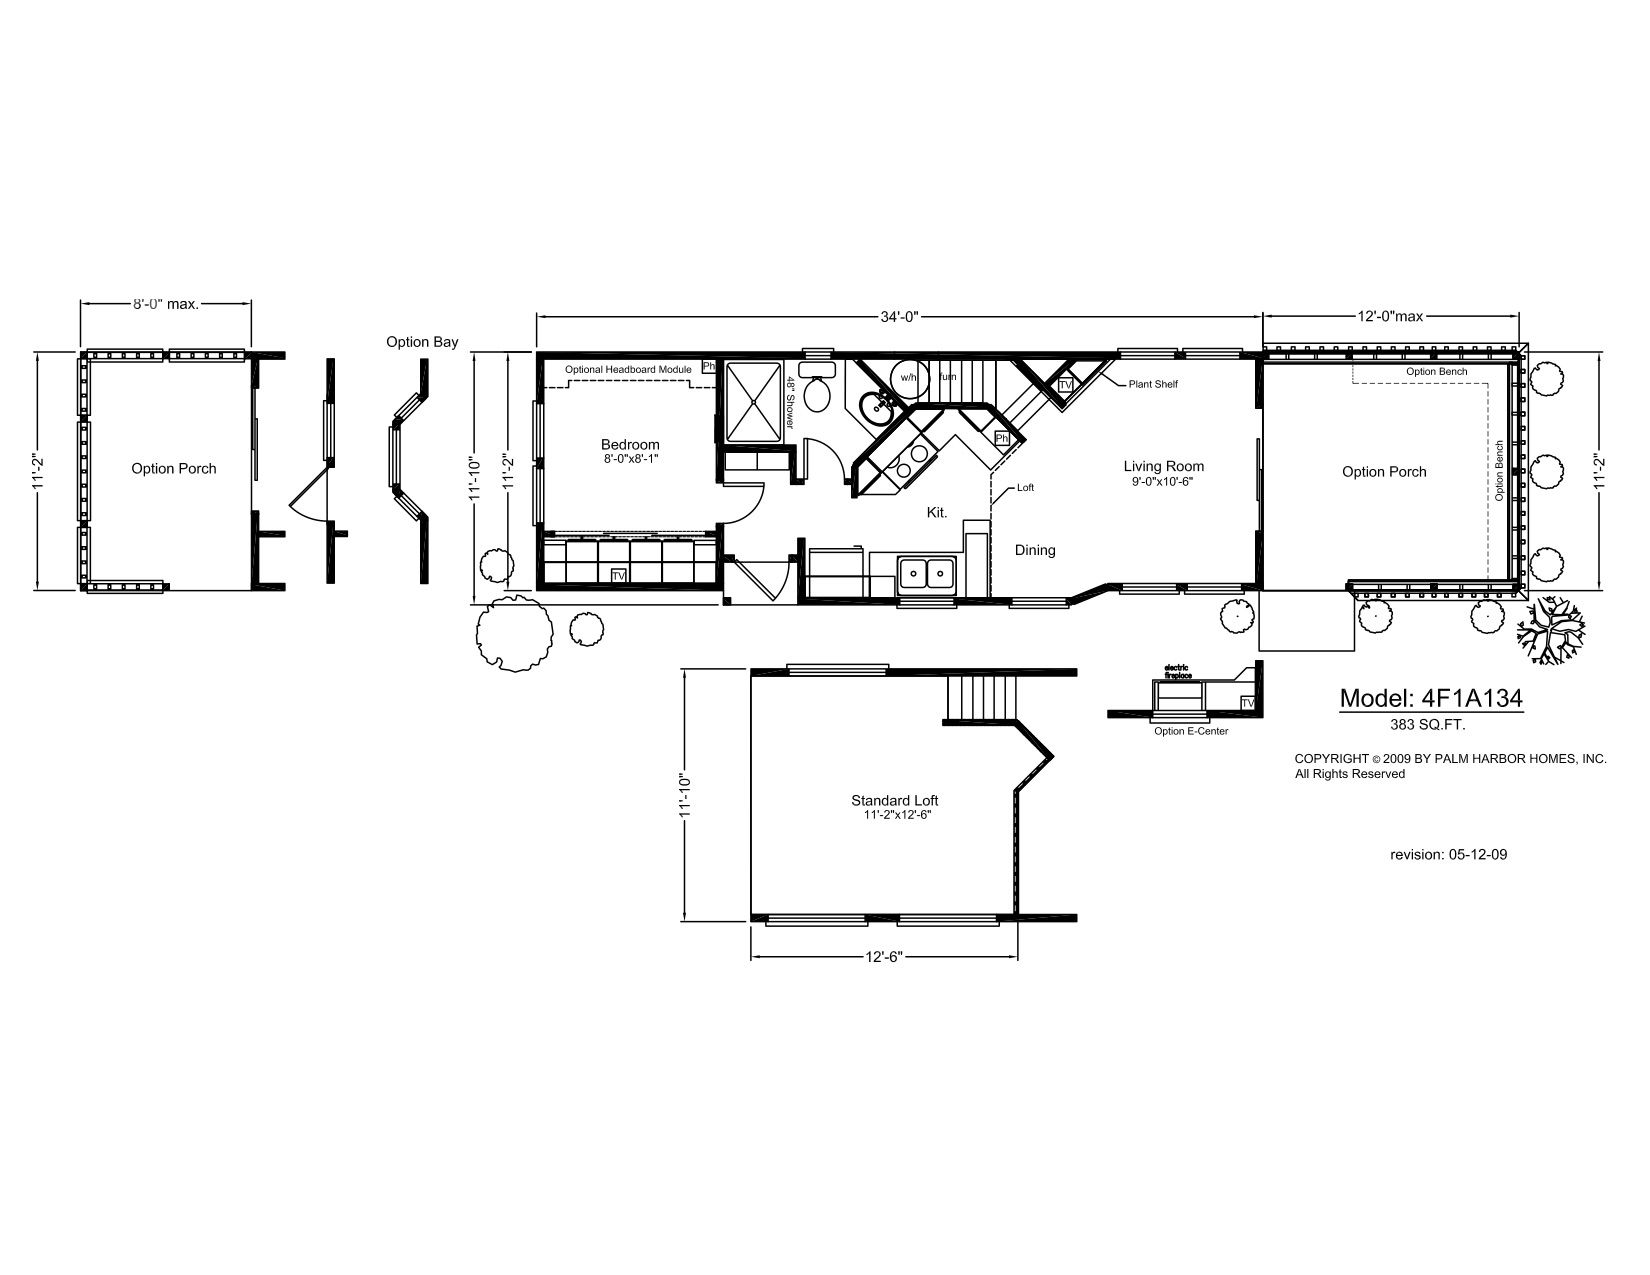 Homes Direct Modular Homes - Model 4F1A134 - Floorplan